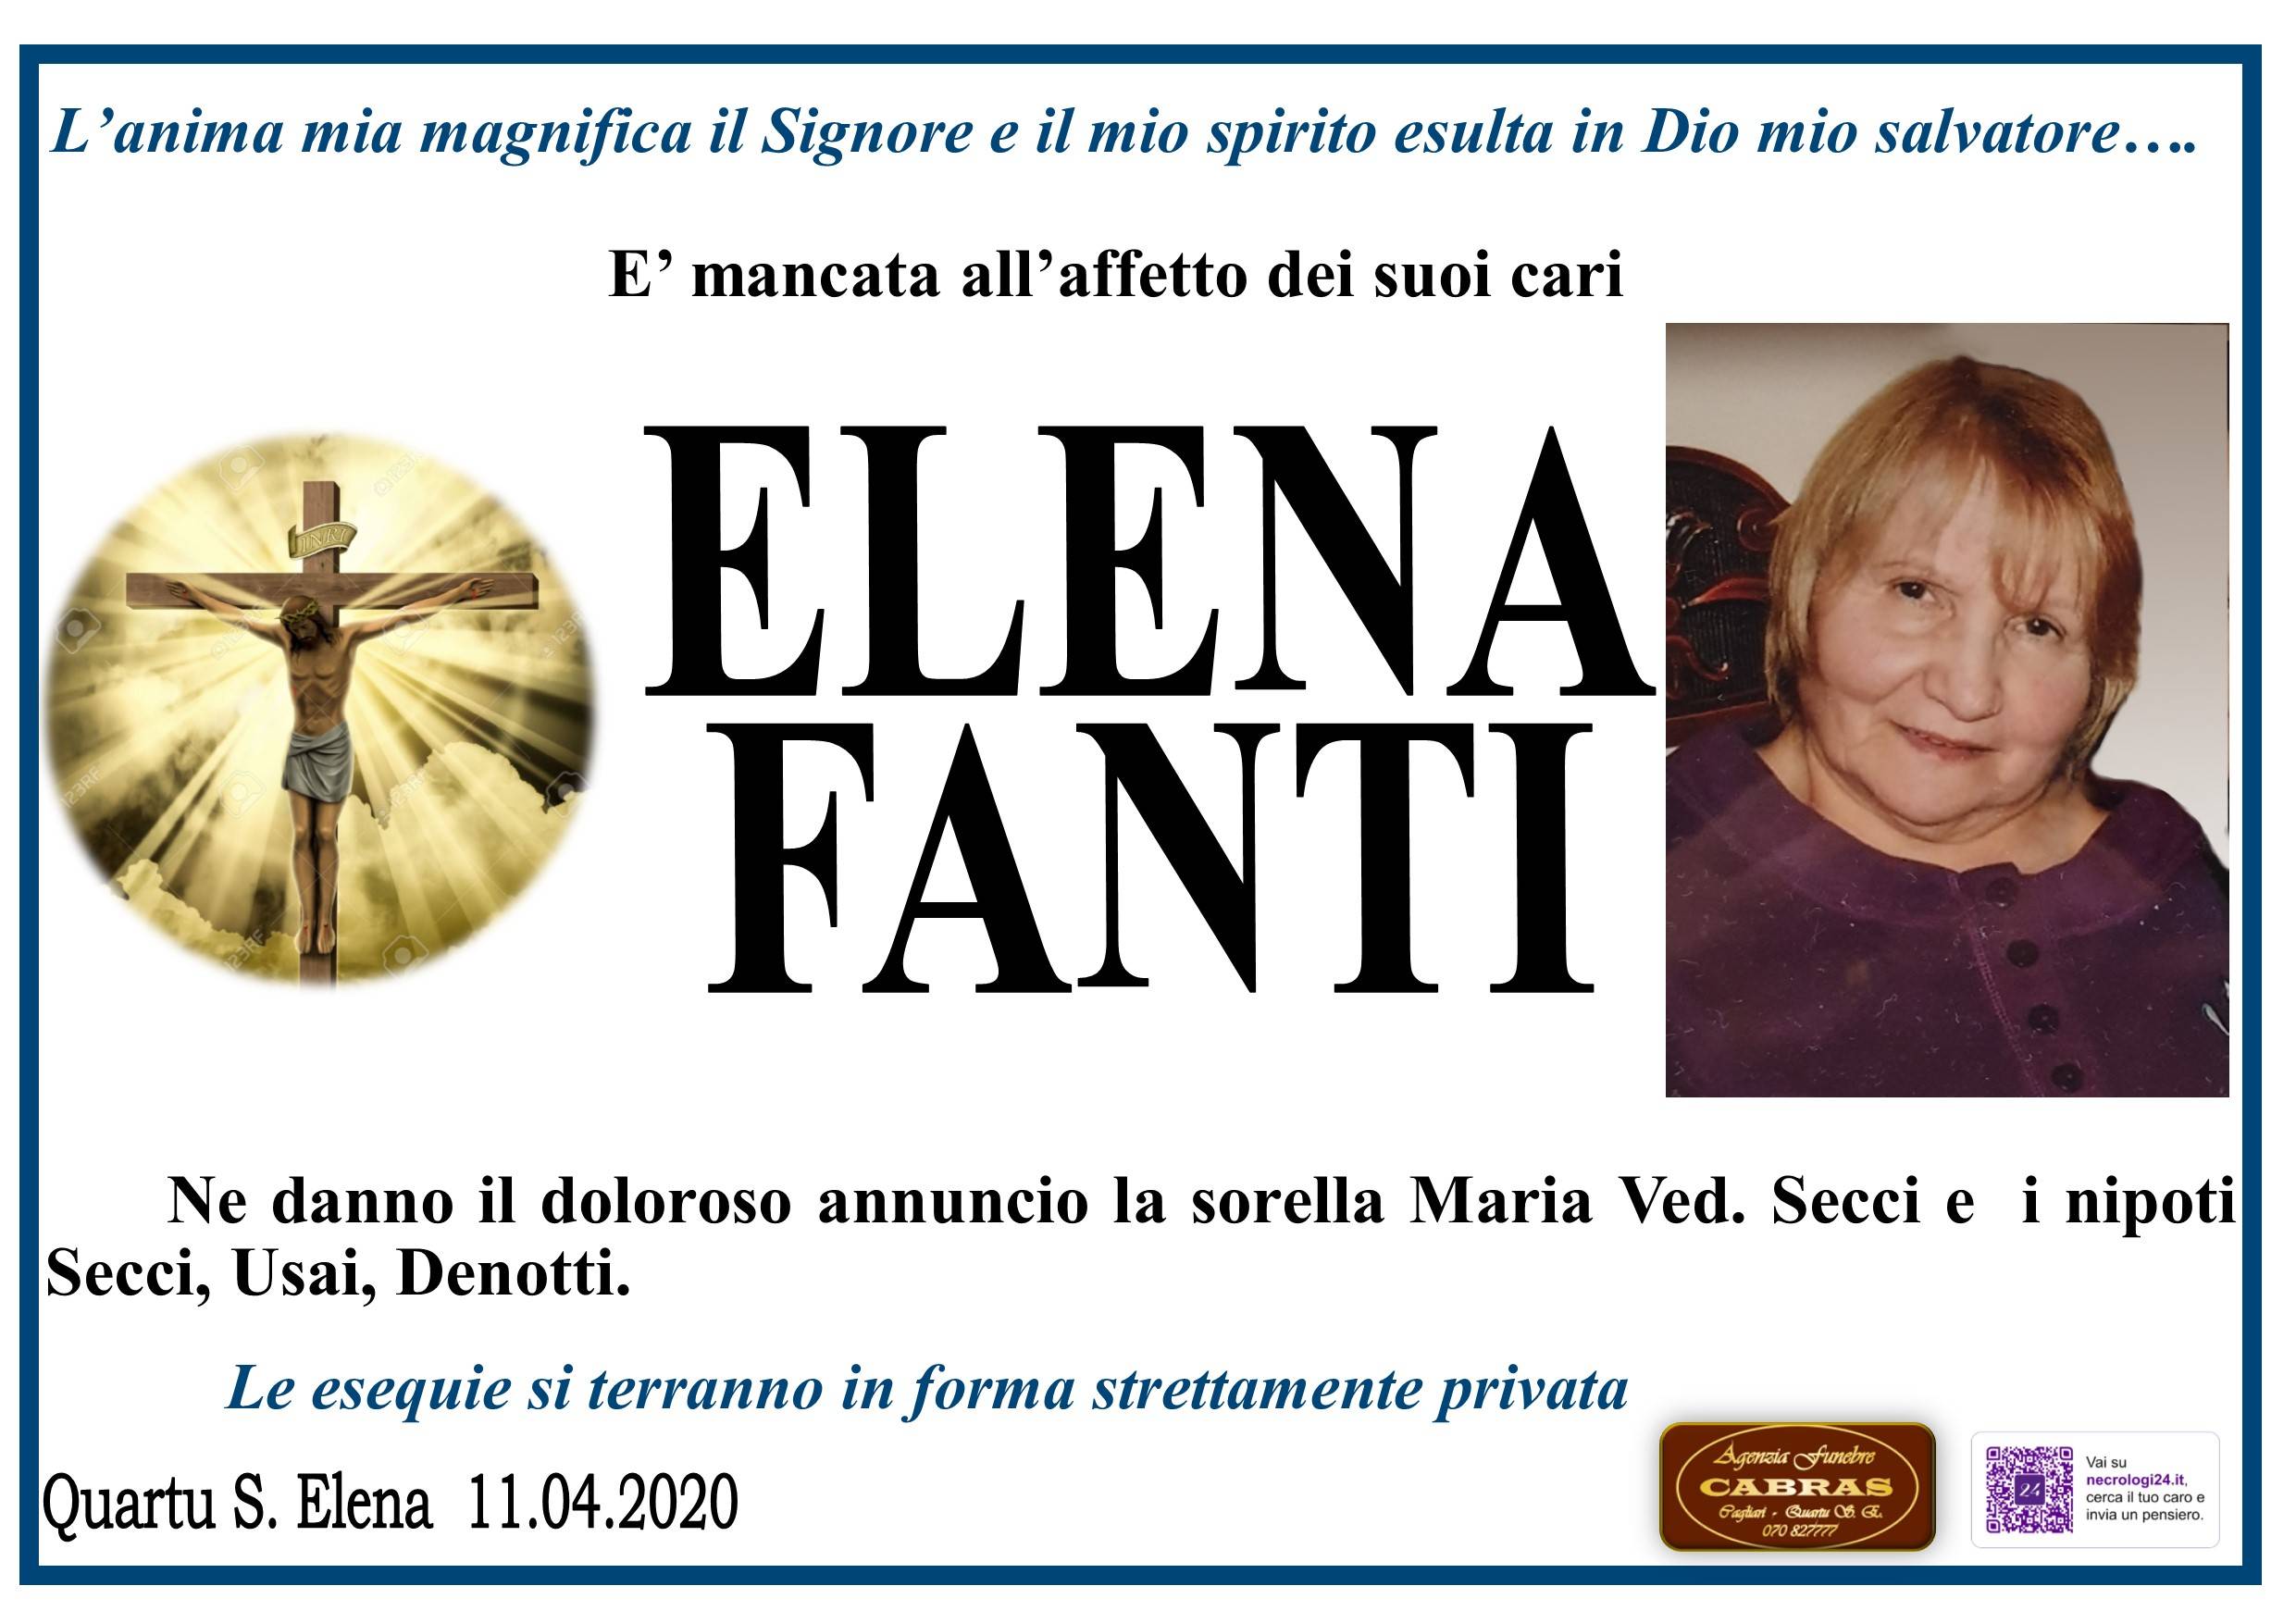 Elena Fanti